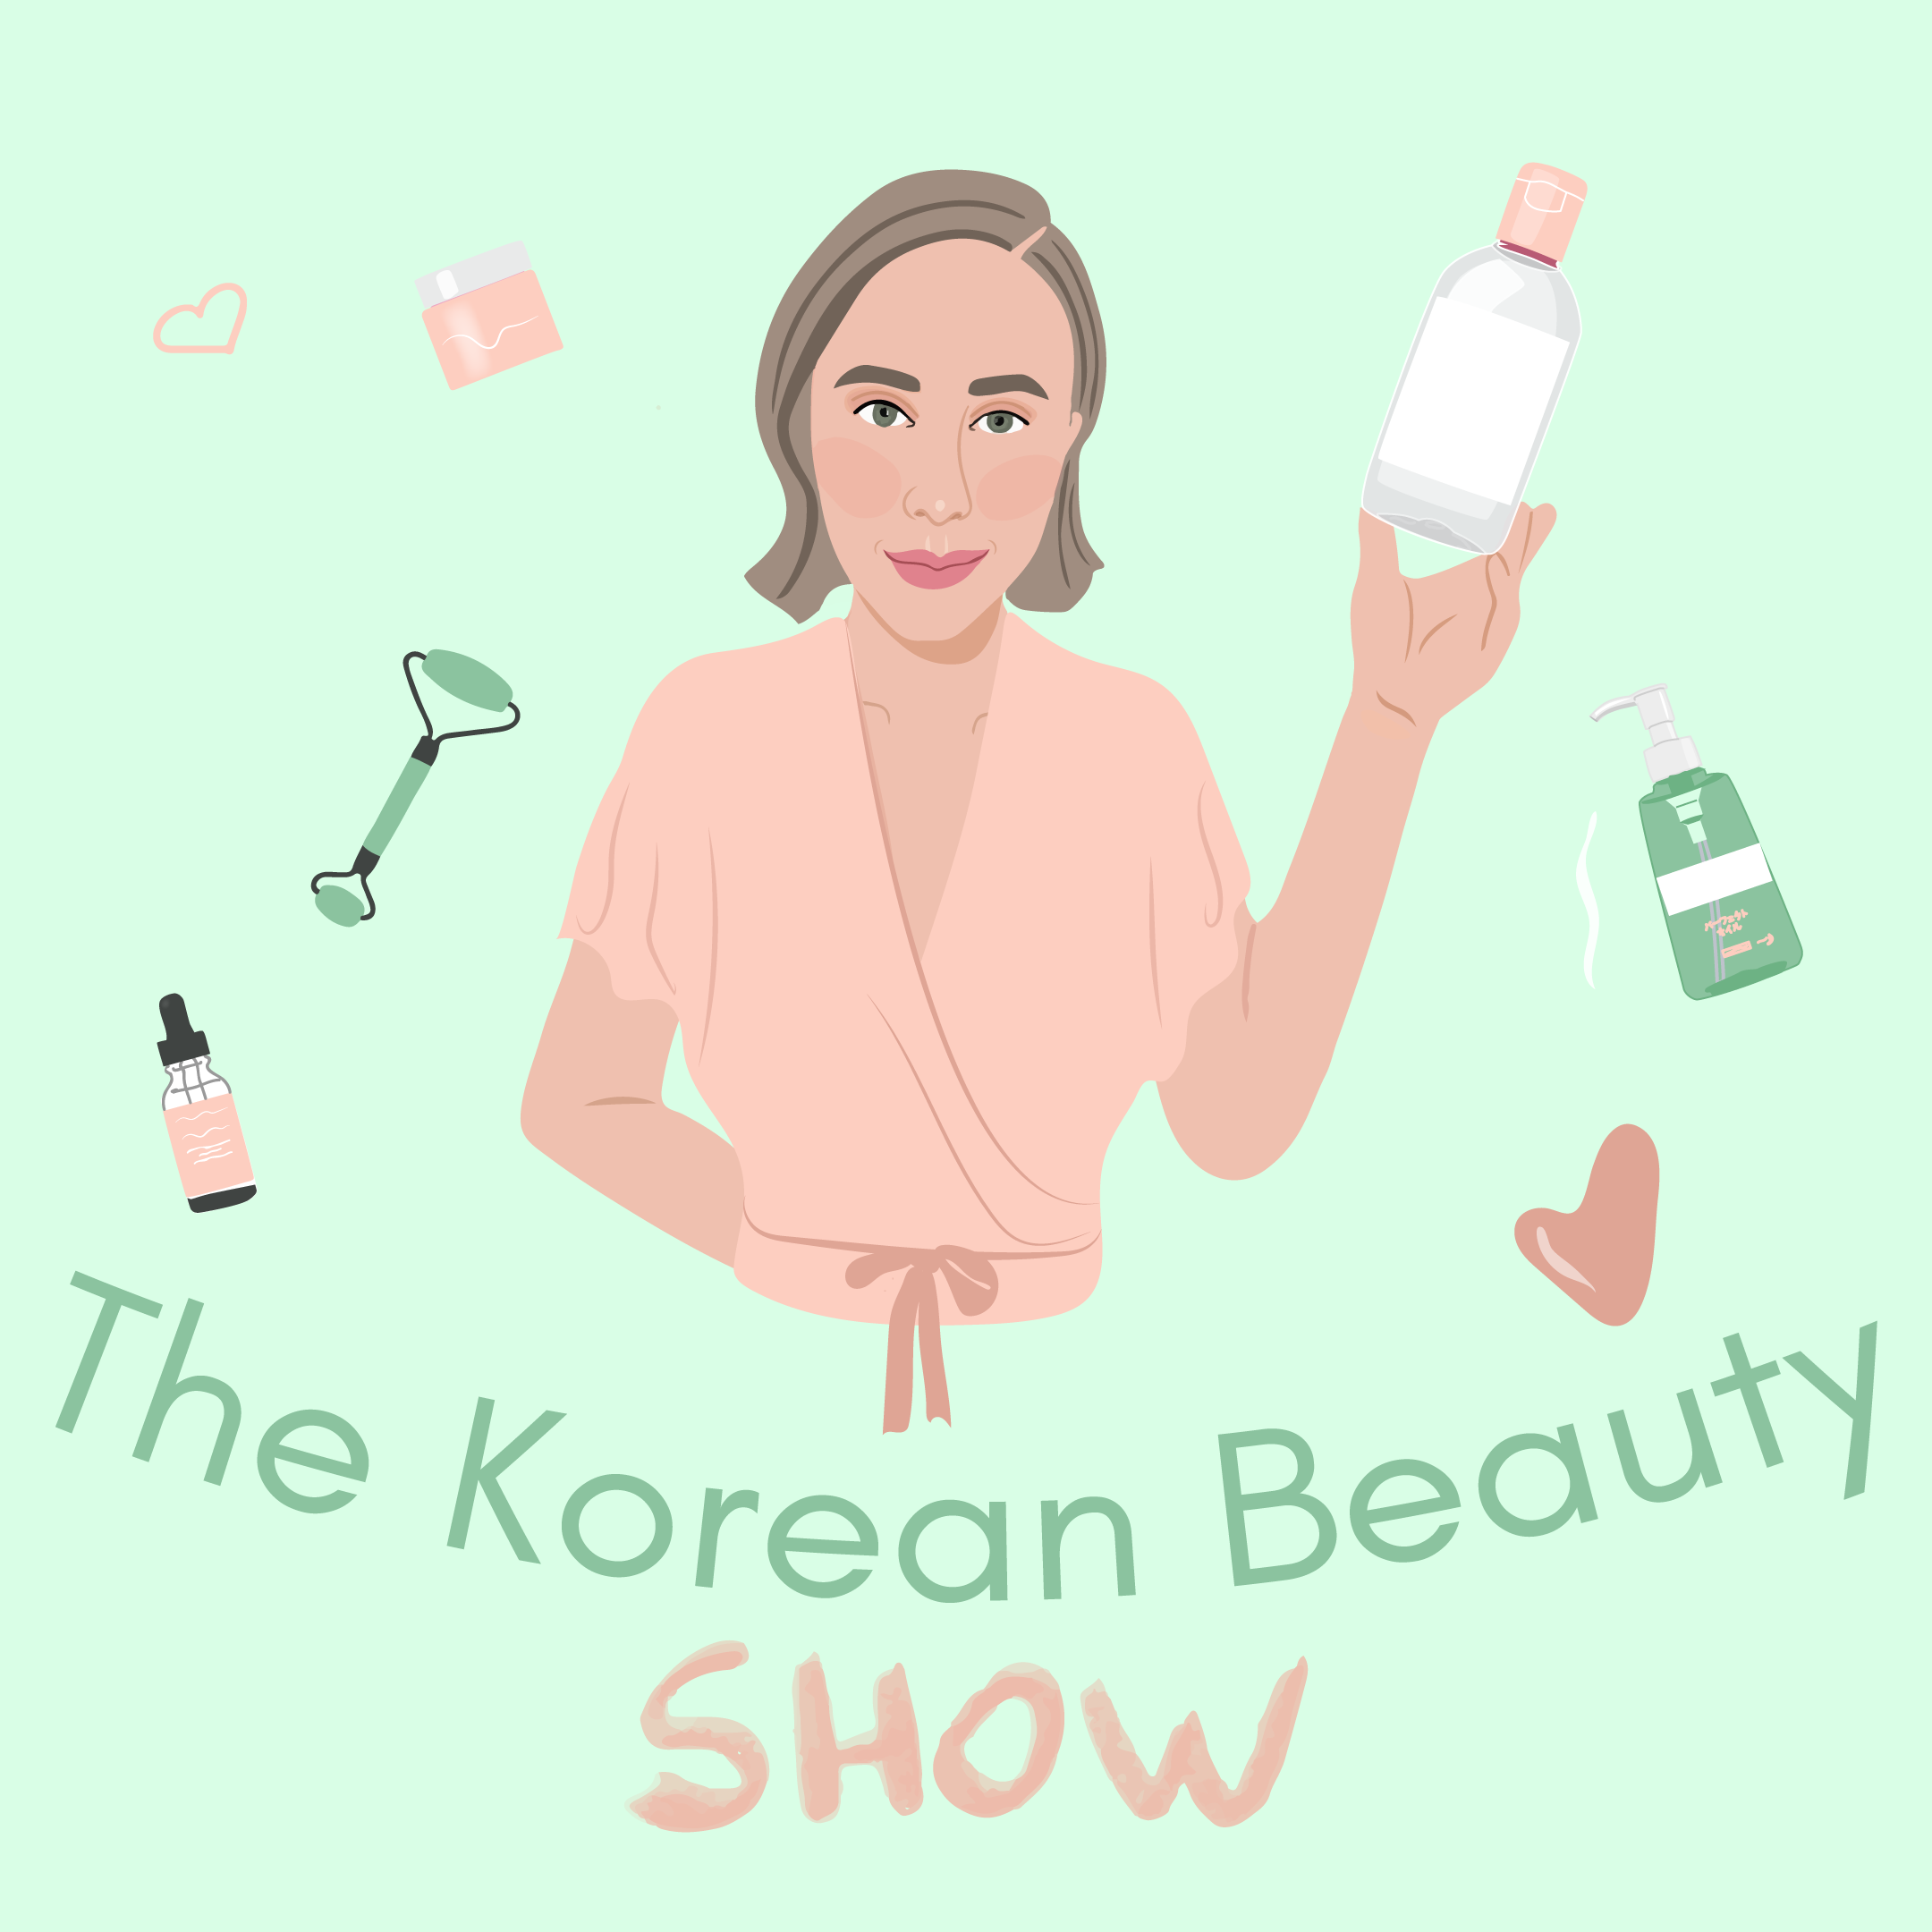 Korean Beauty in Korea